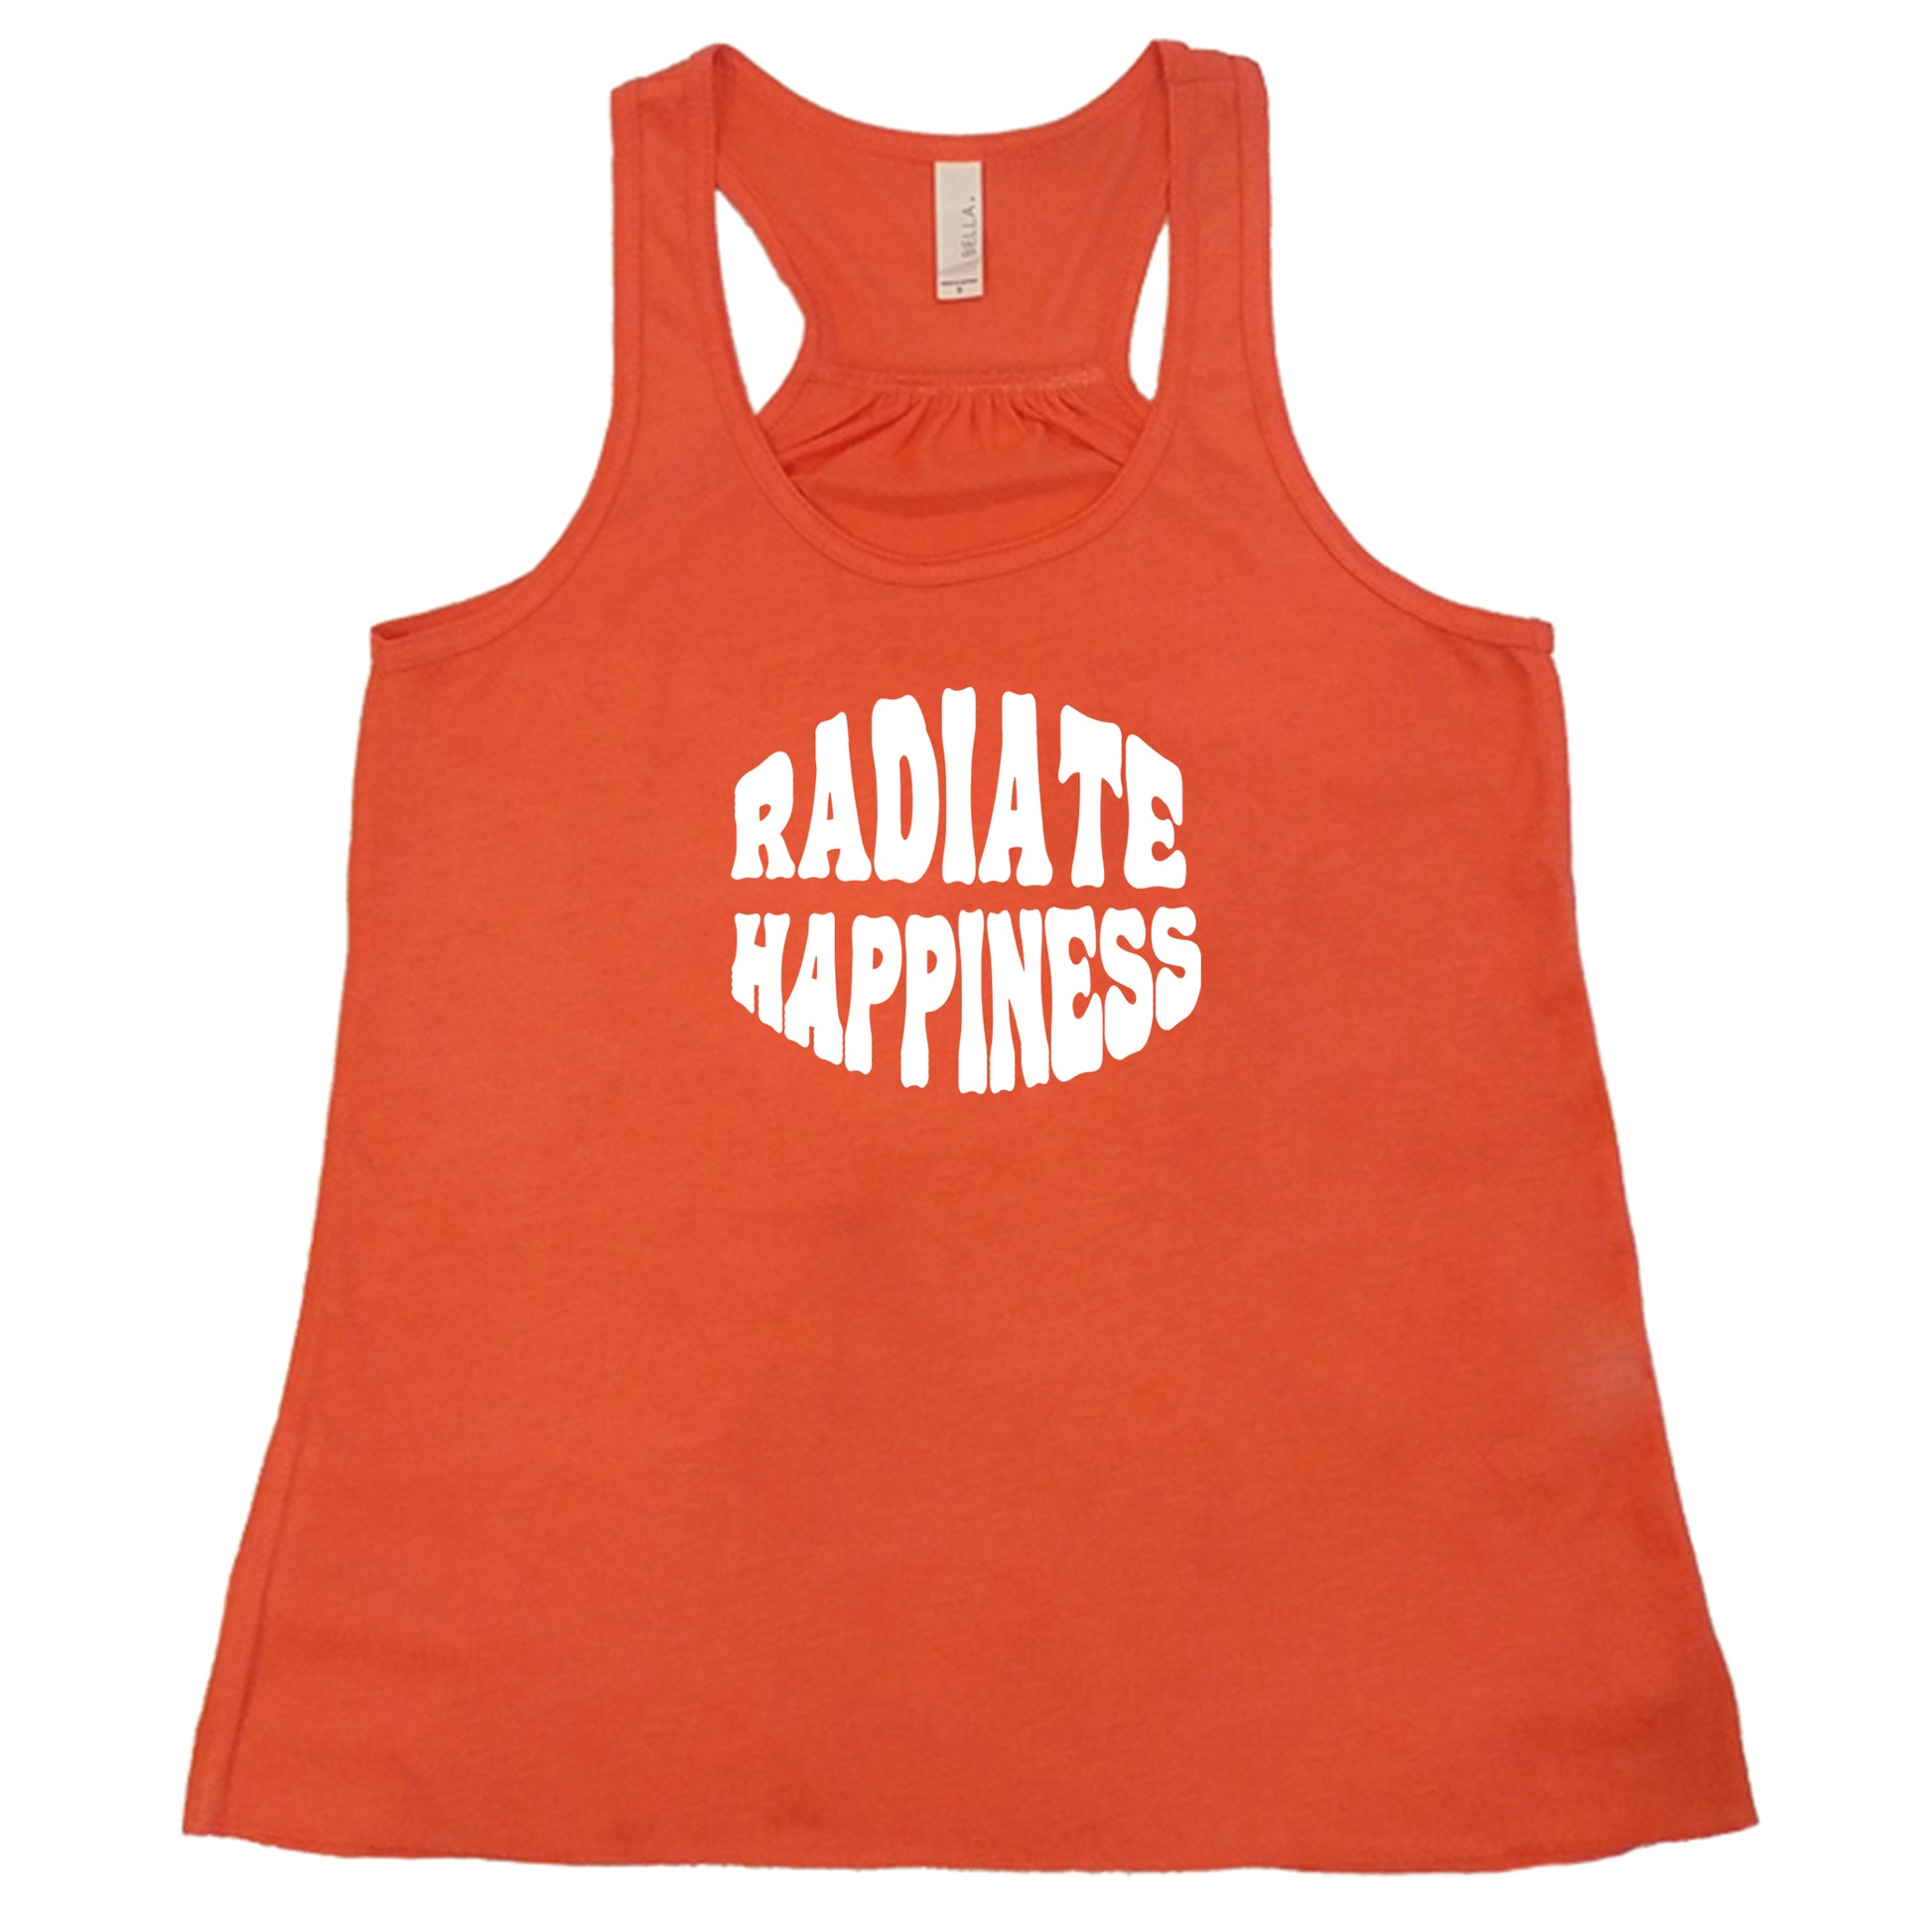 radiate happiness coral racerback shirt